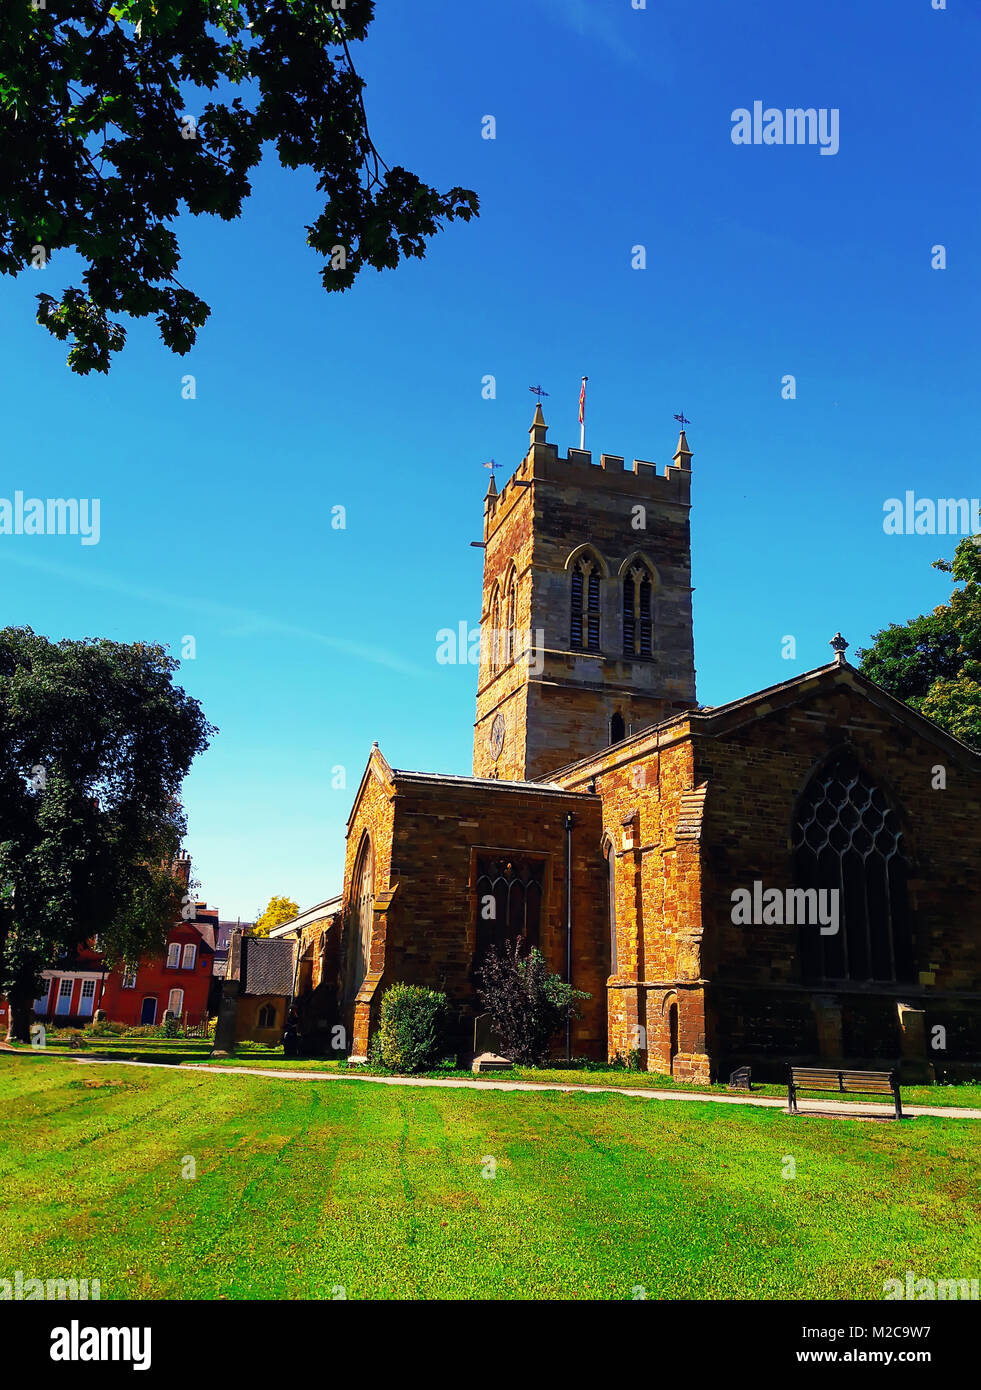 St Giles old, anglican church in Northampton, United Kingdom. Stock Photo